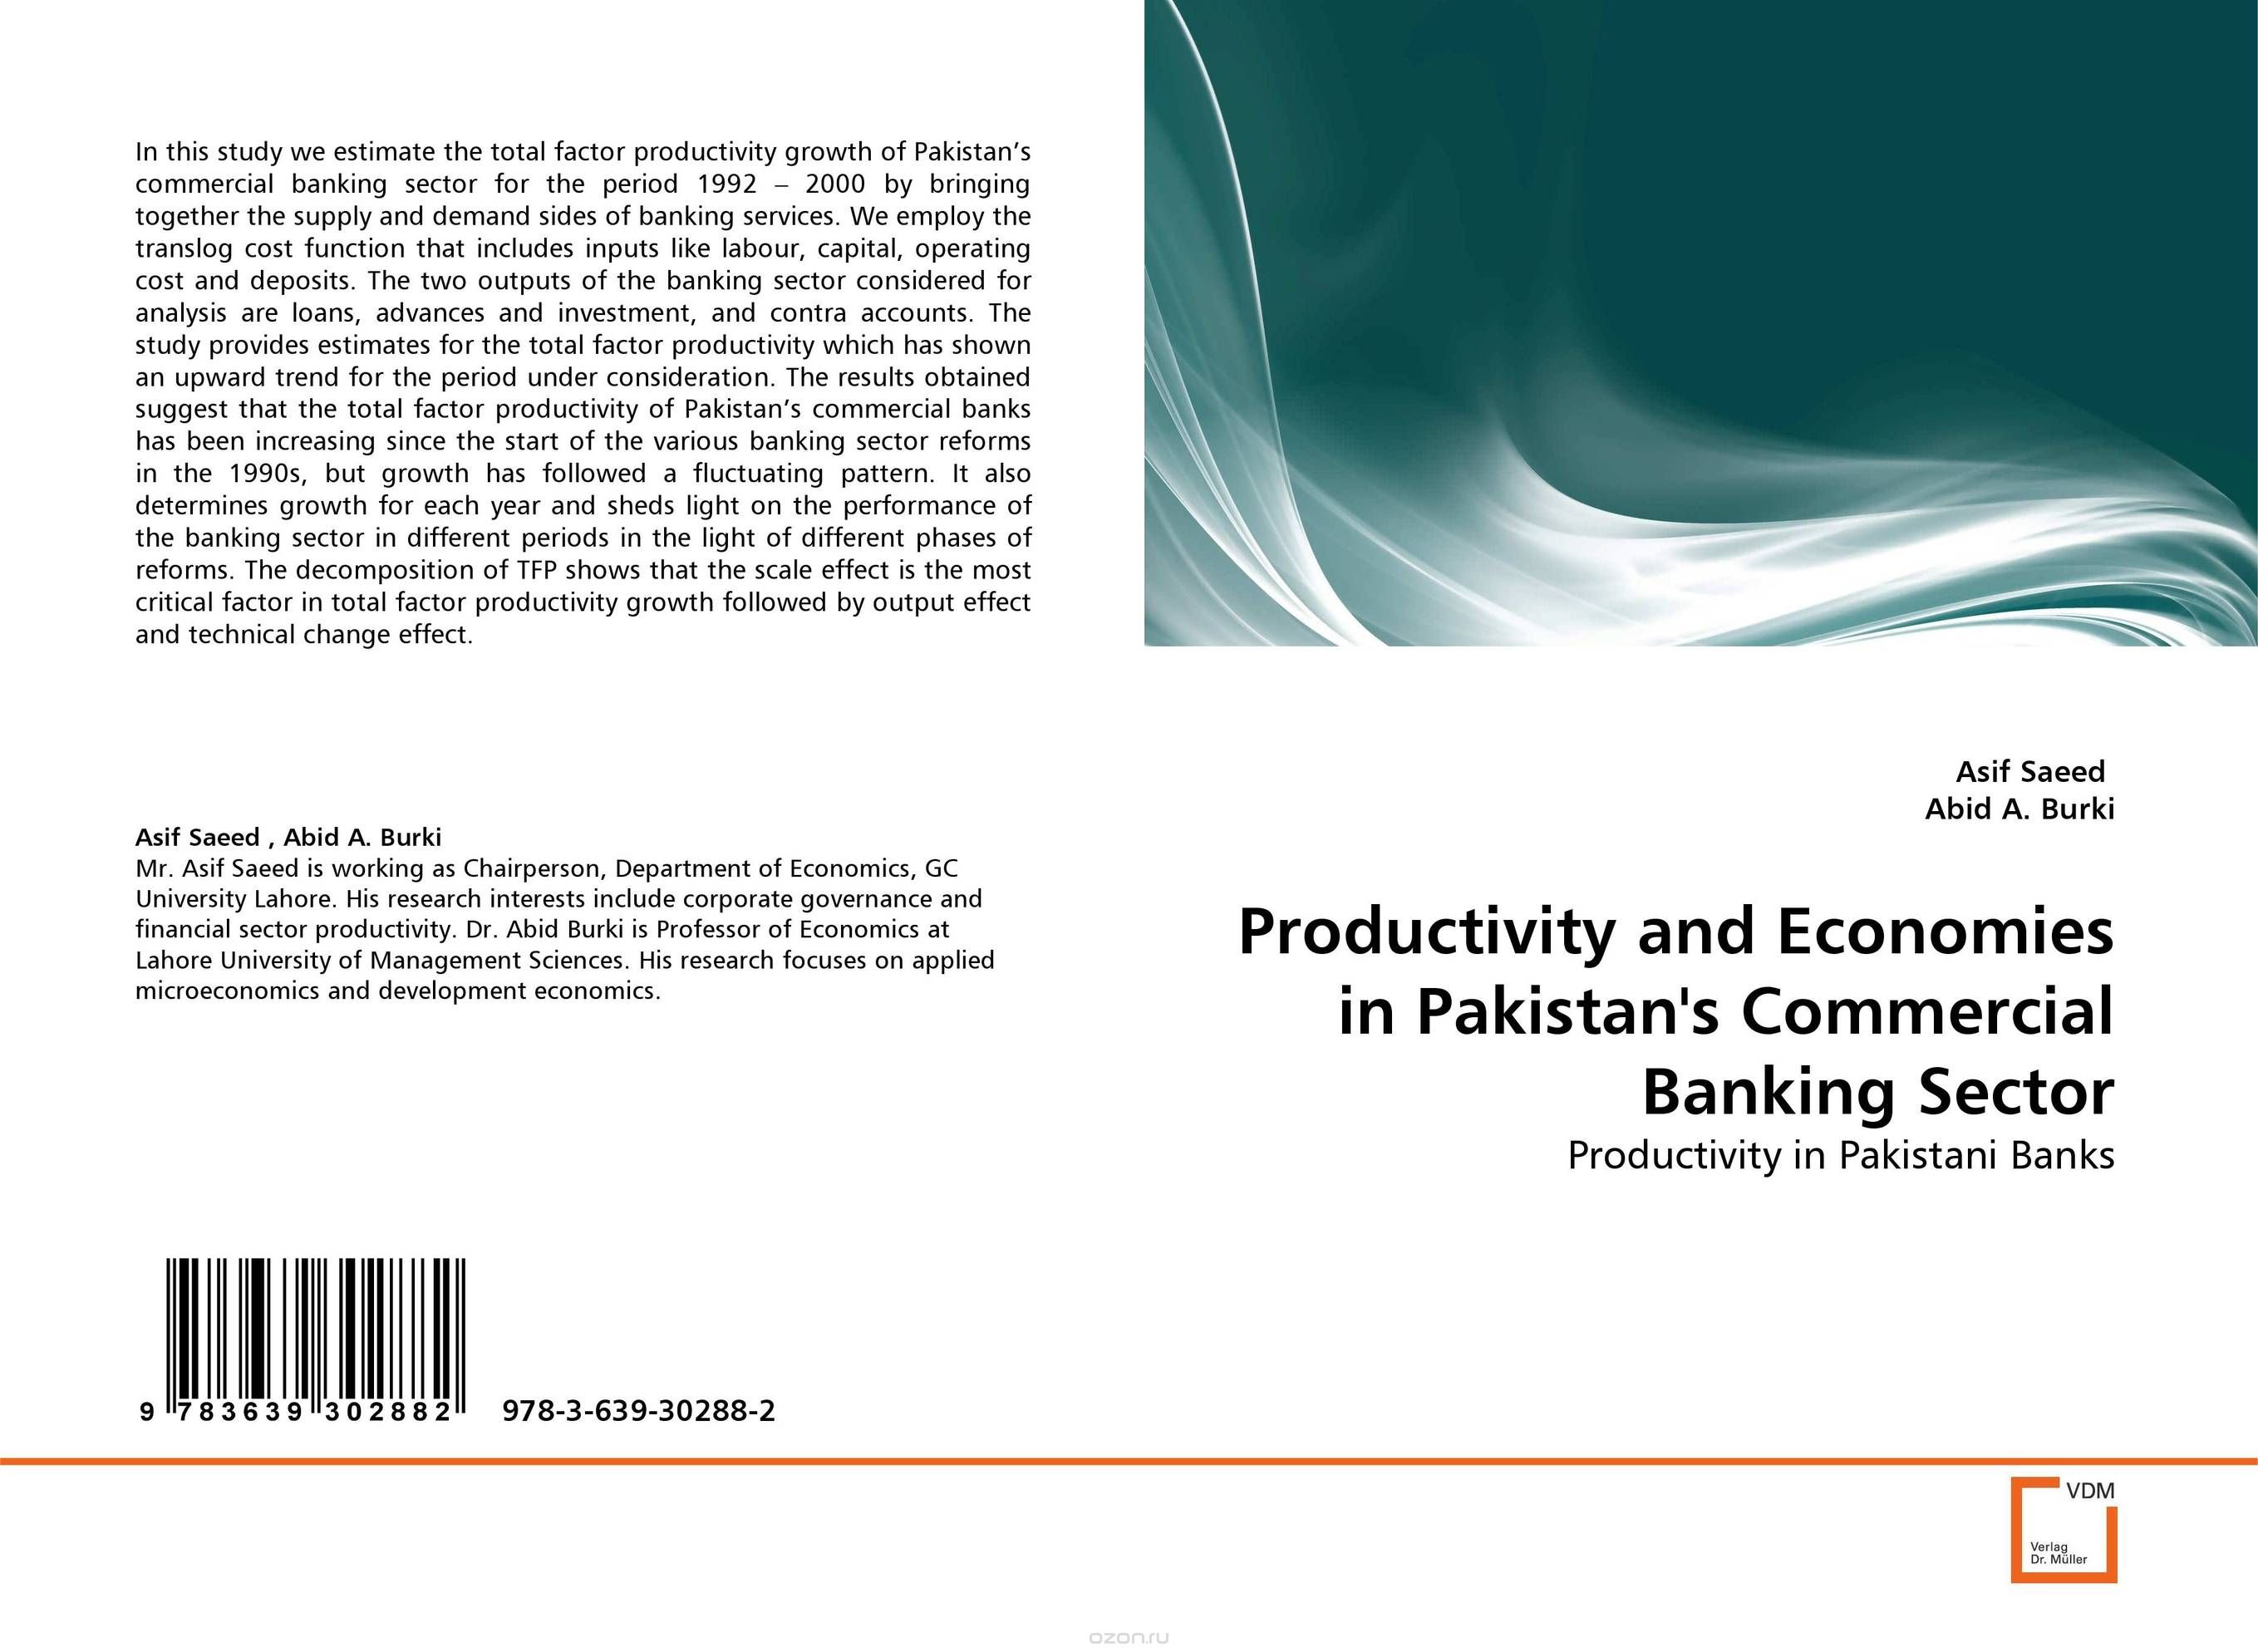 Скачать книгу "Productivity and Economies in Pakistan''s Commercial Banking Sector"